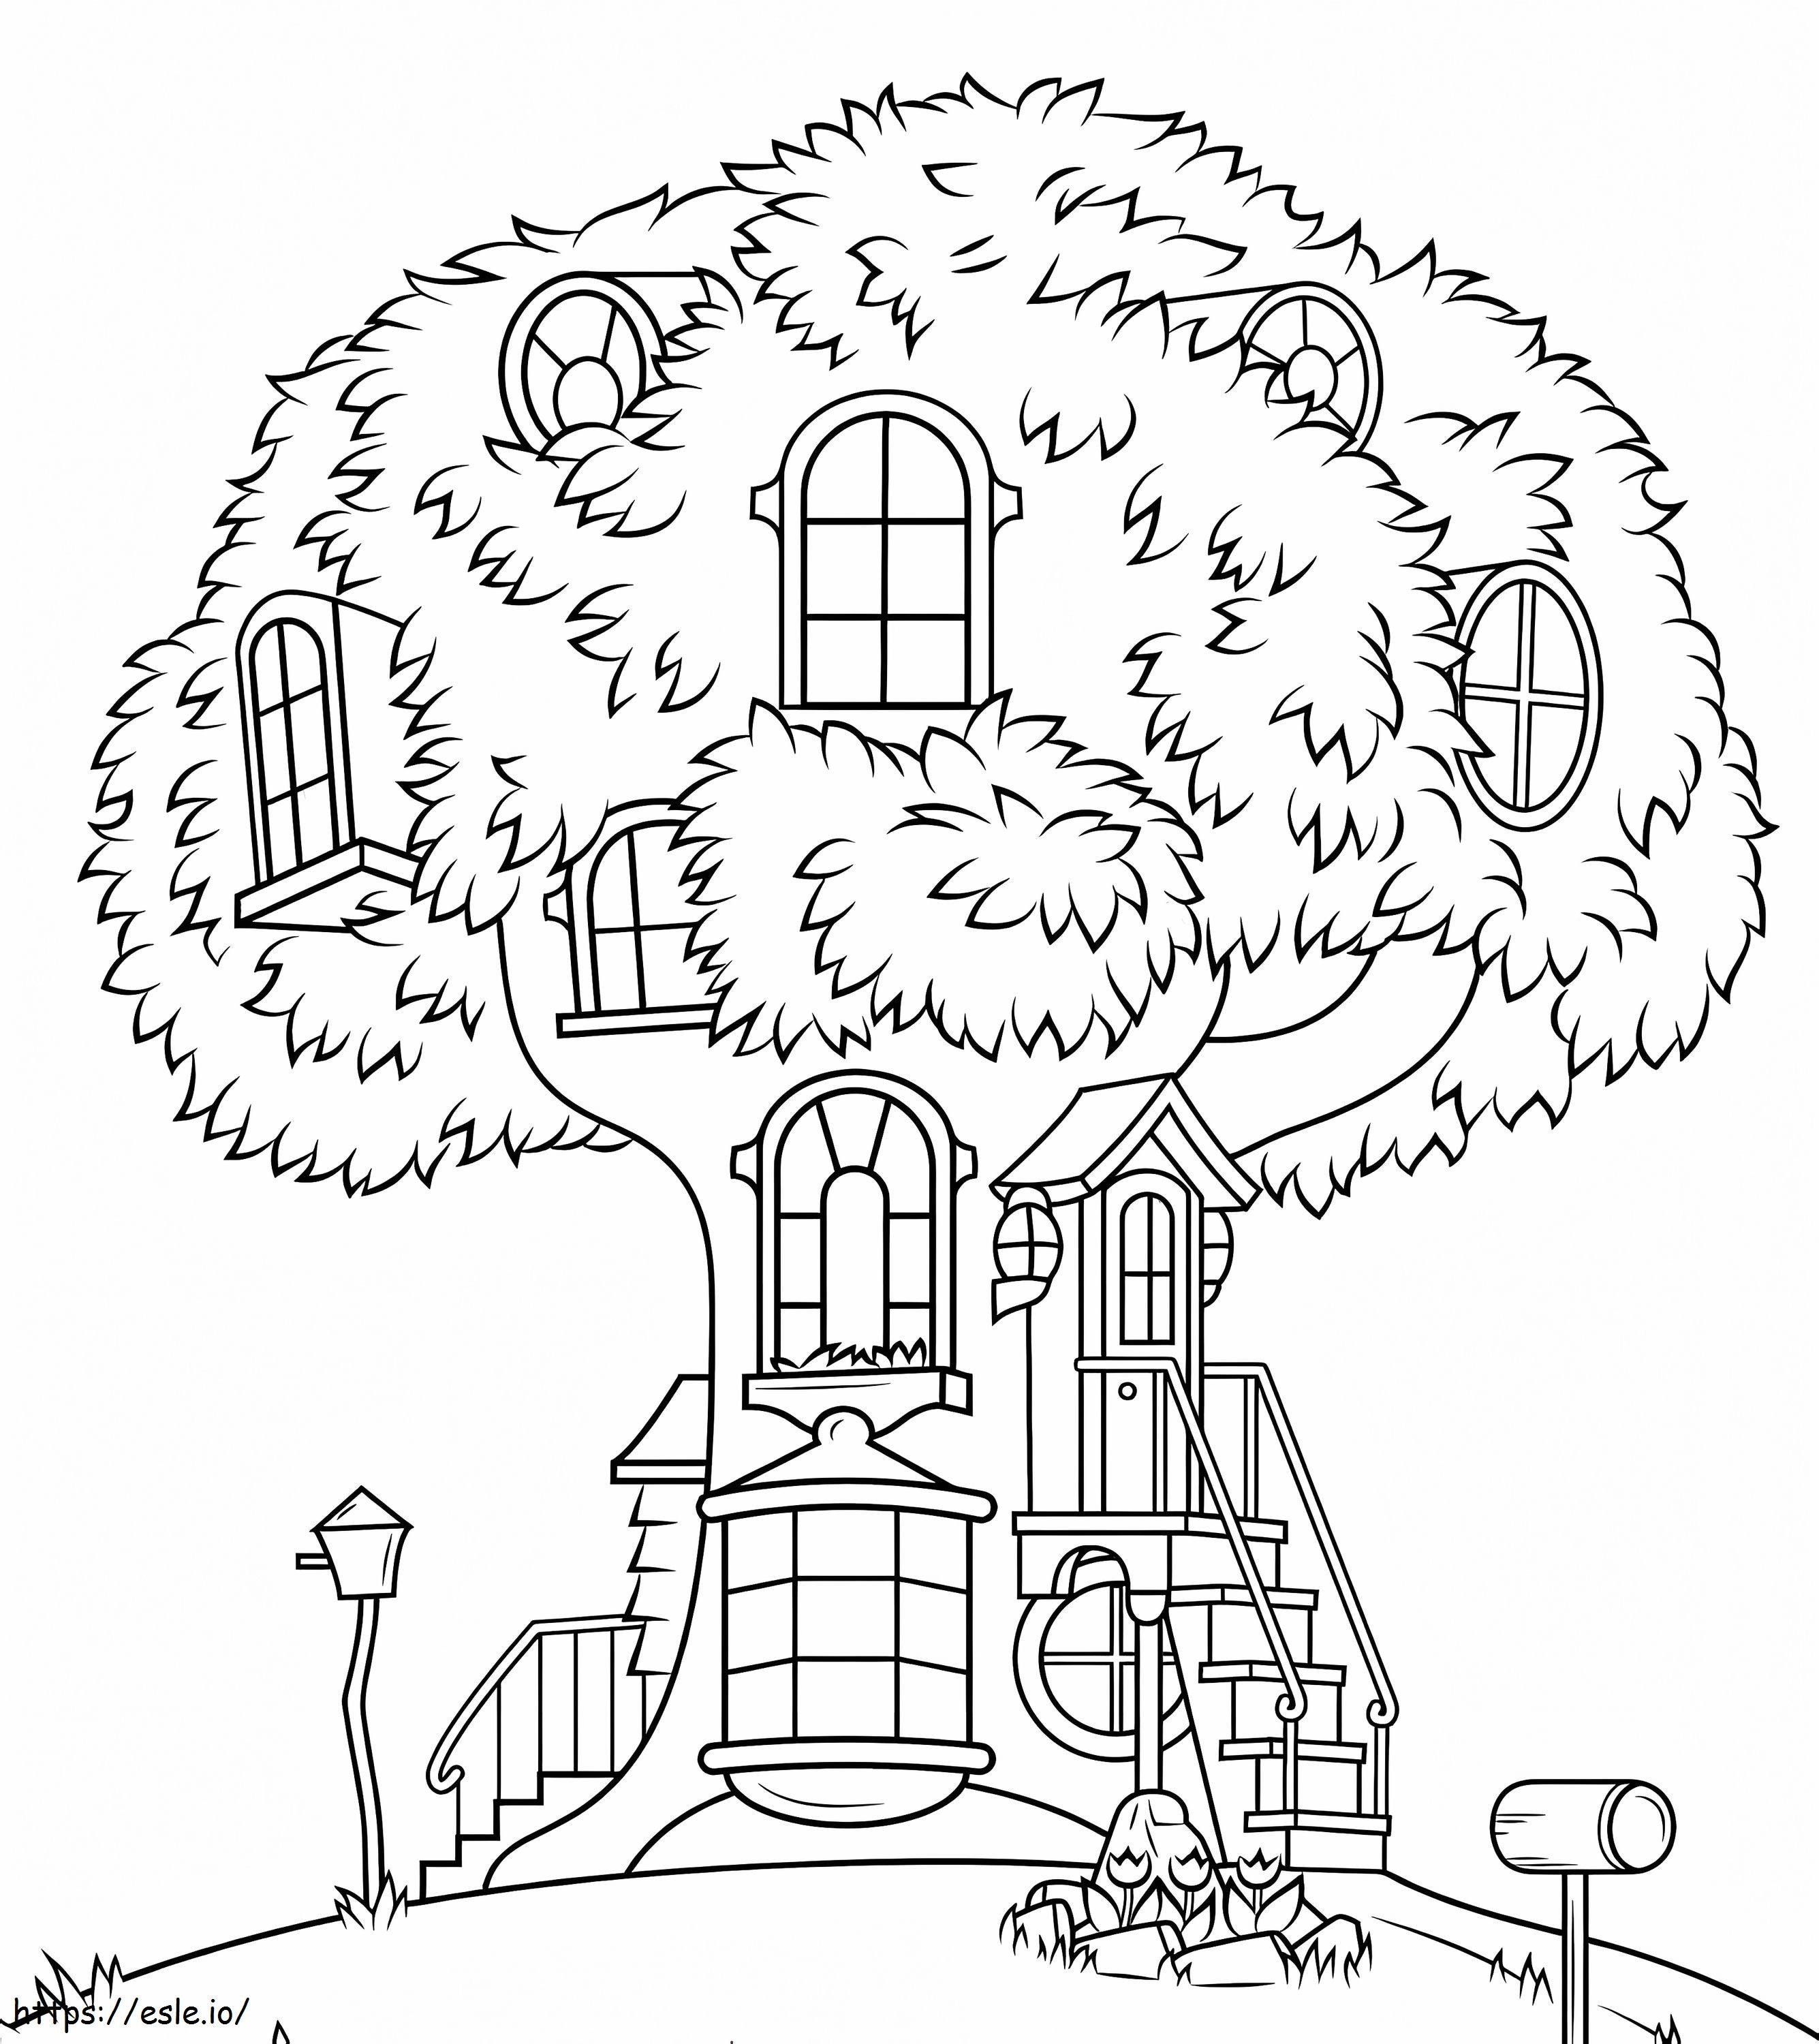 Berenstain Bears Tree House kifestő